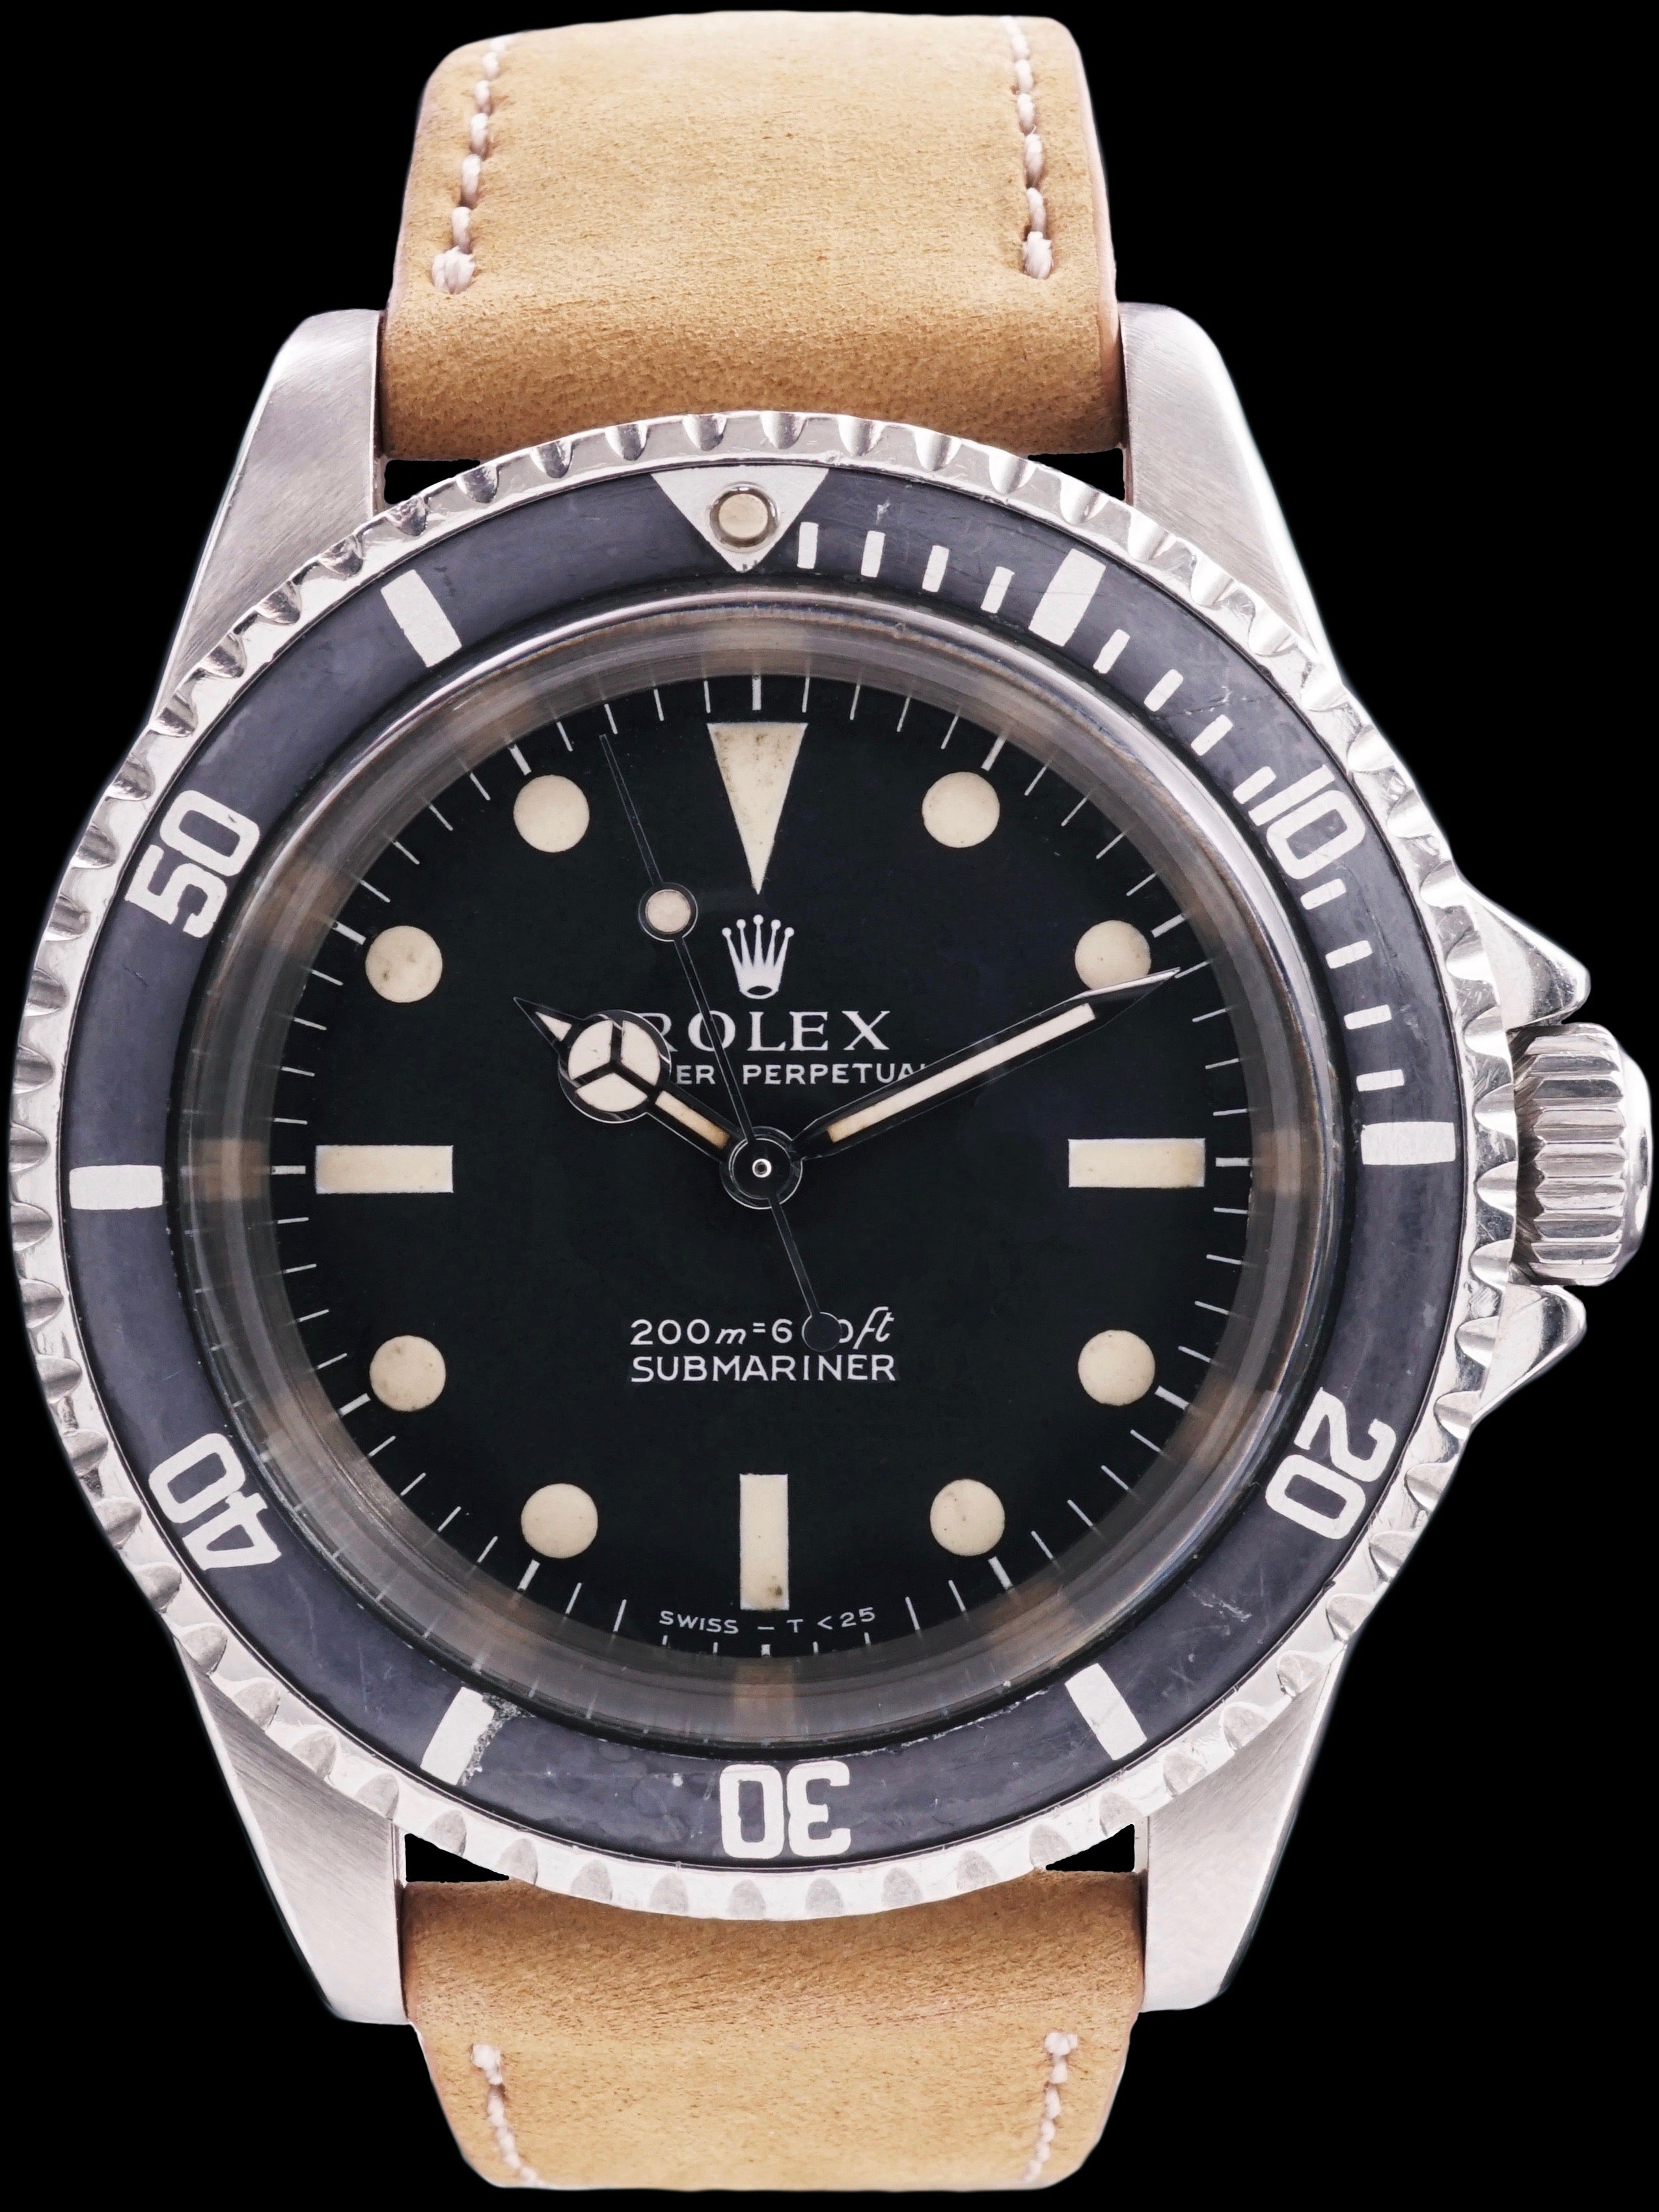 1969 Rolex Submariner (Ref. 5513) "Meters First" w/ Kissing 40 bezel